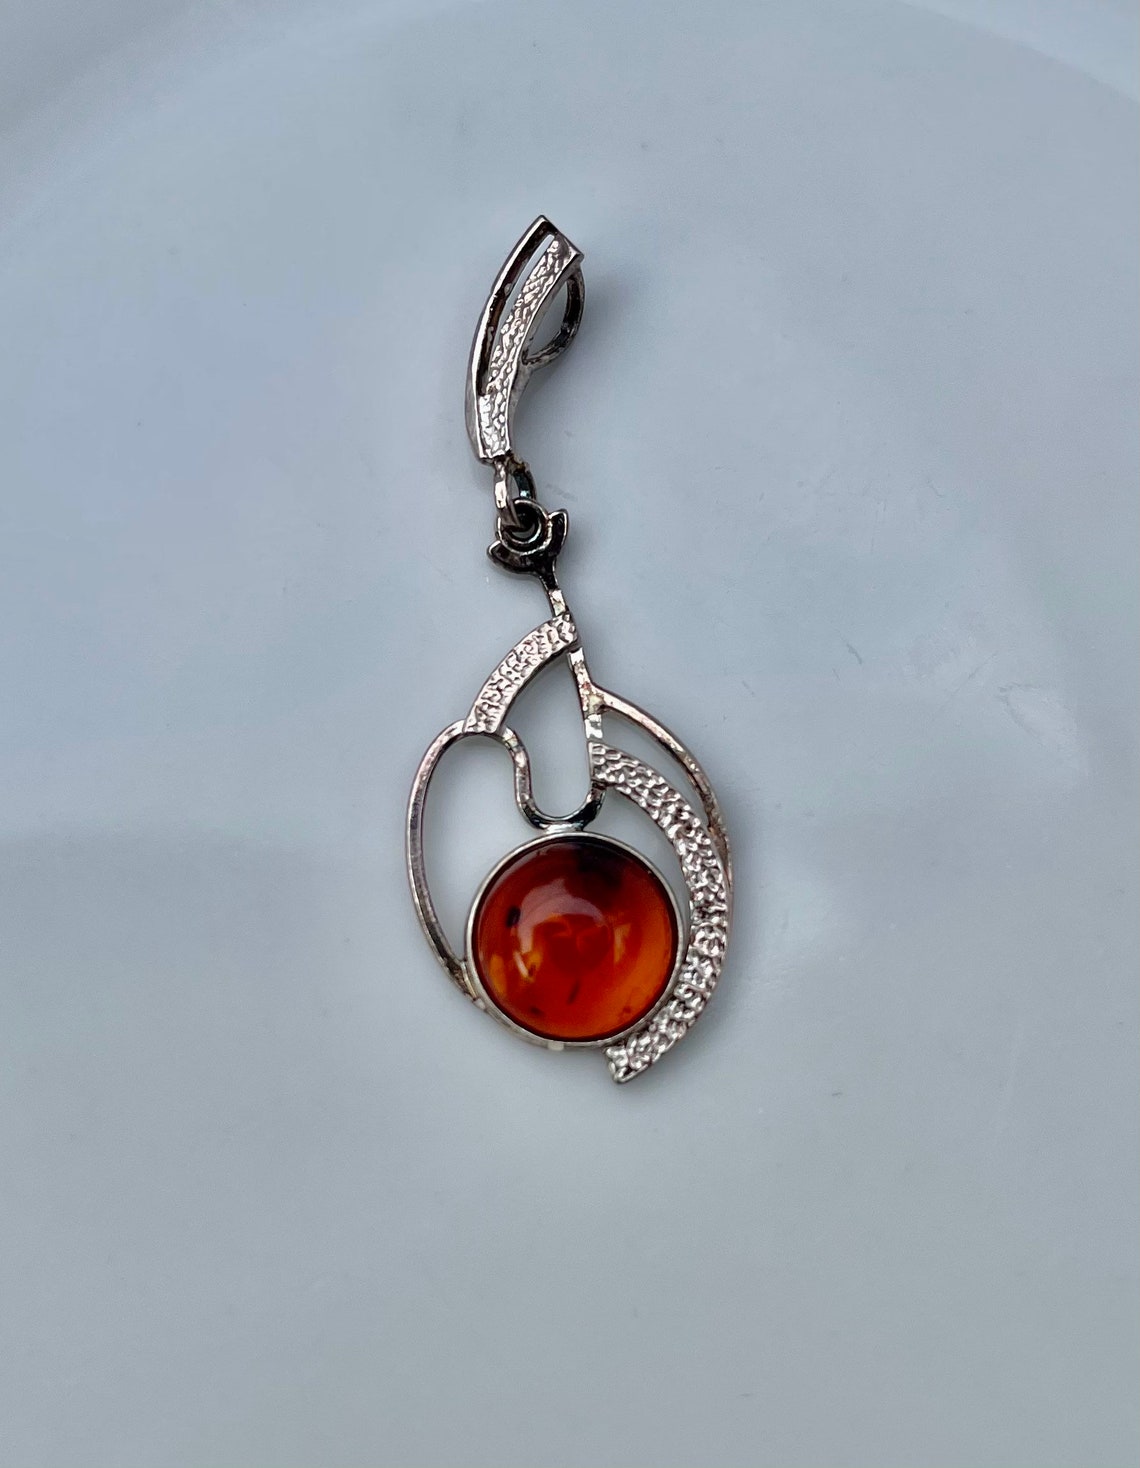 Unique Art Deco Vintage Pendant, Bodhi Jewelry